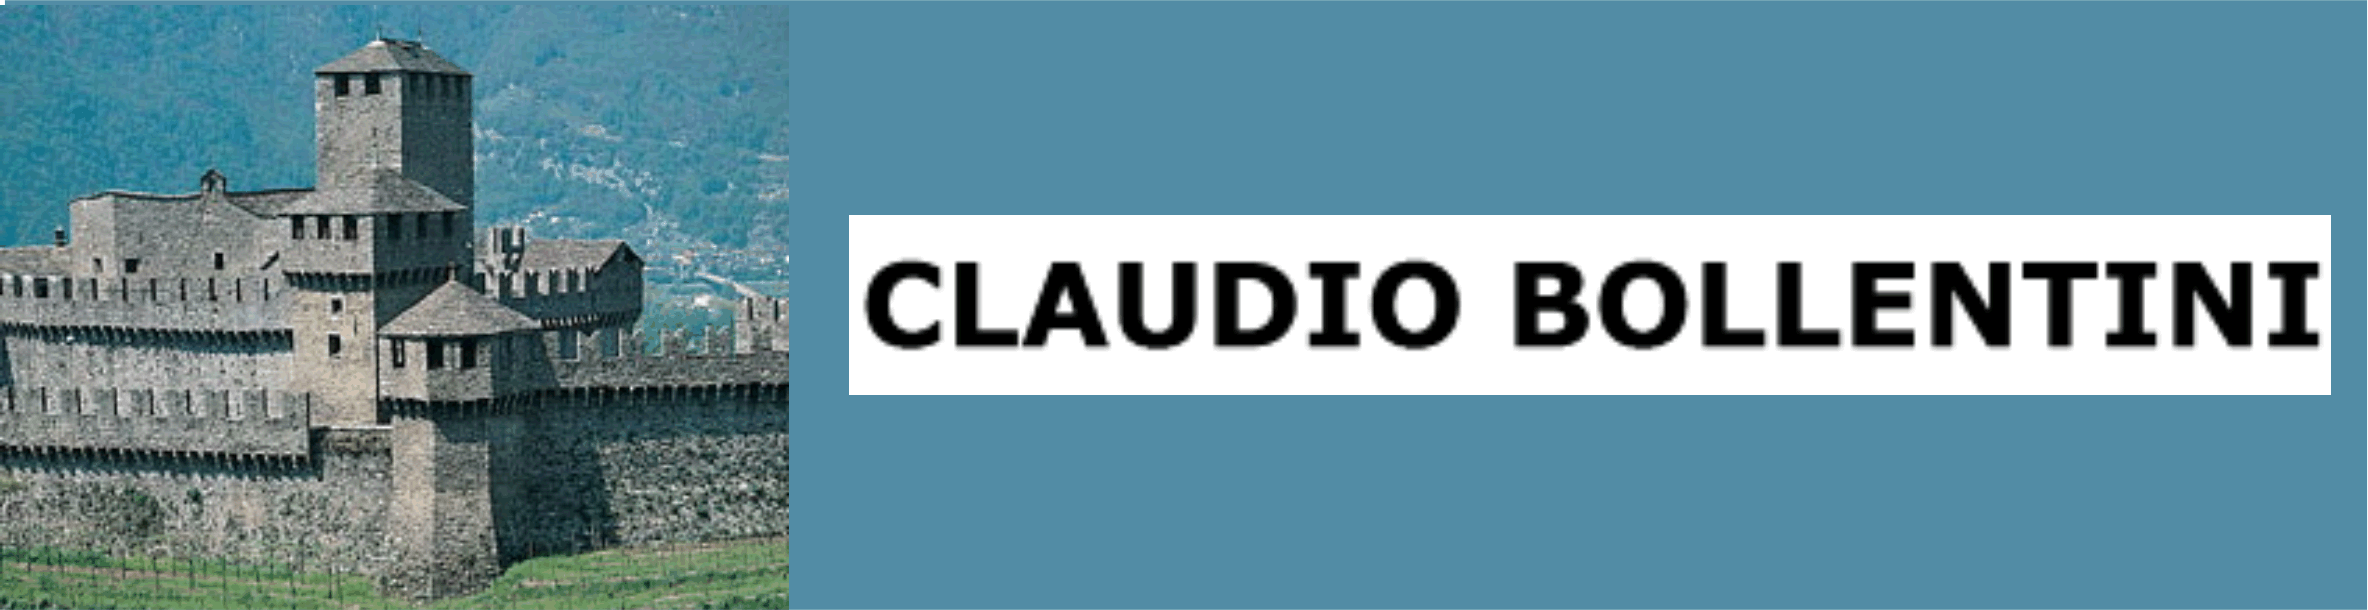 banner claudio